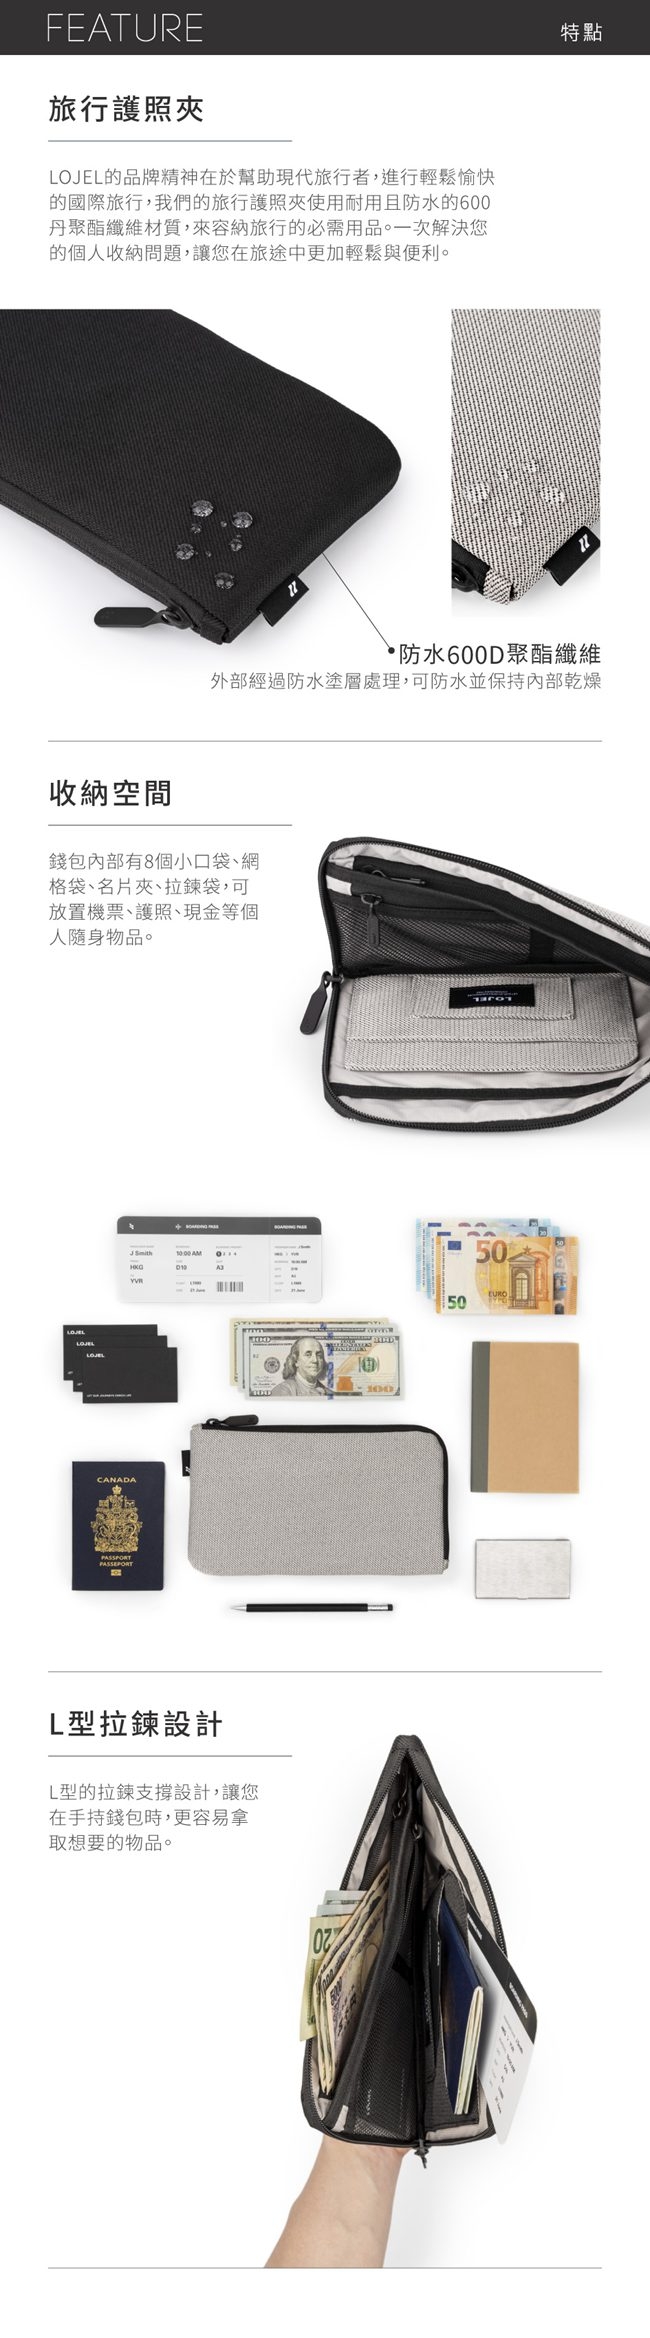 LOJEL Travel Wallet 護照夾 收納包 零錢包 黑色